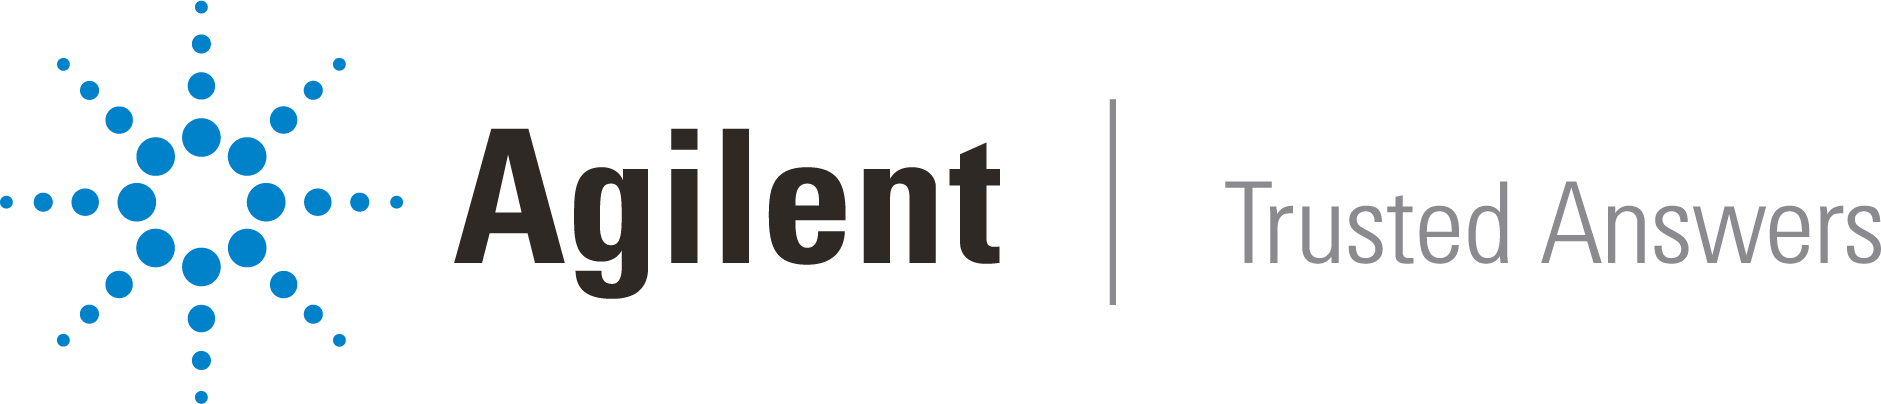 Silver agilent logo